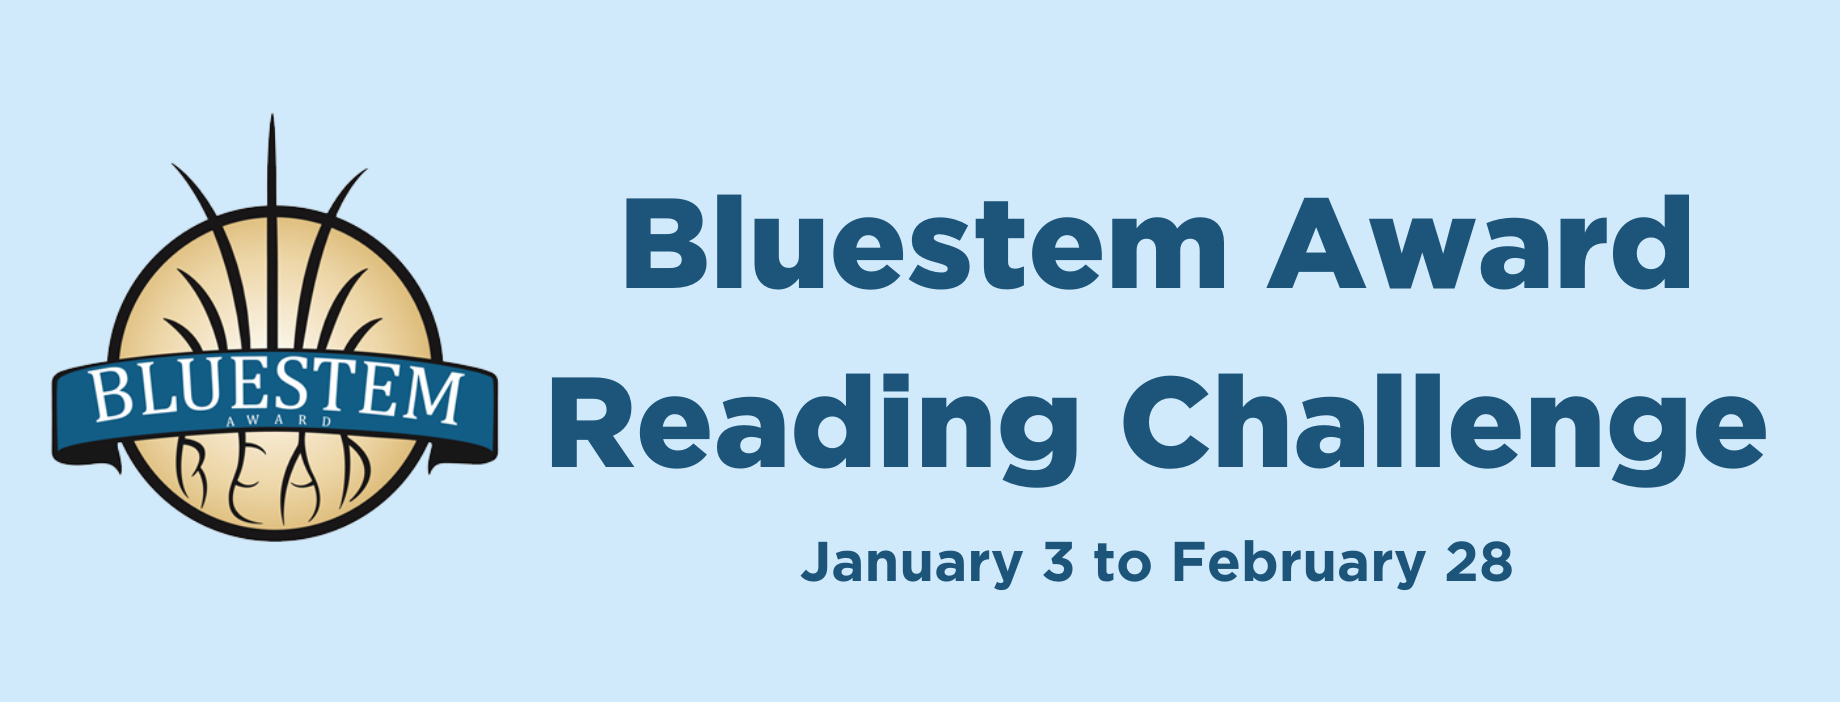 Bluestem Award Reading Challenge